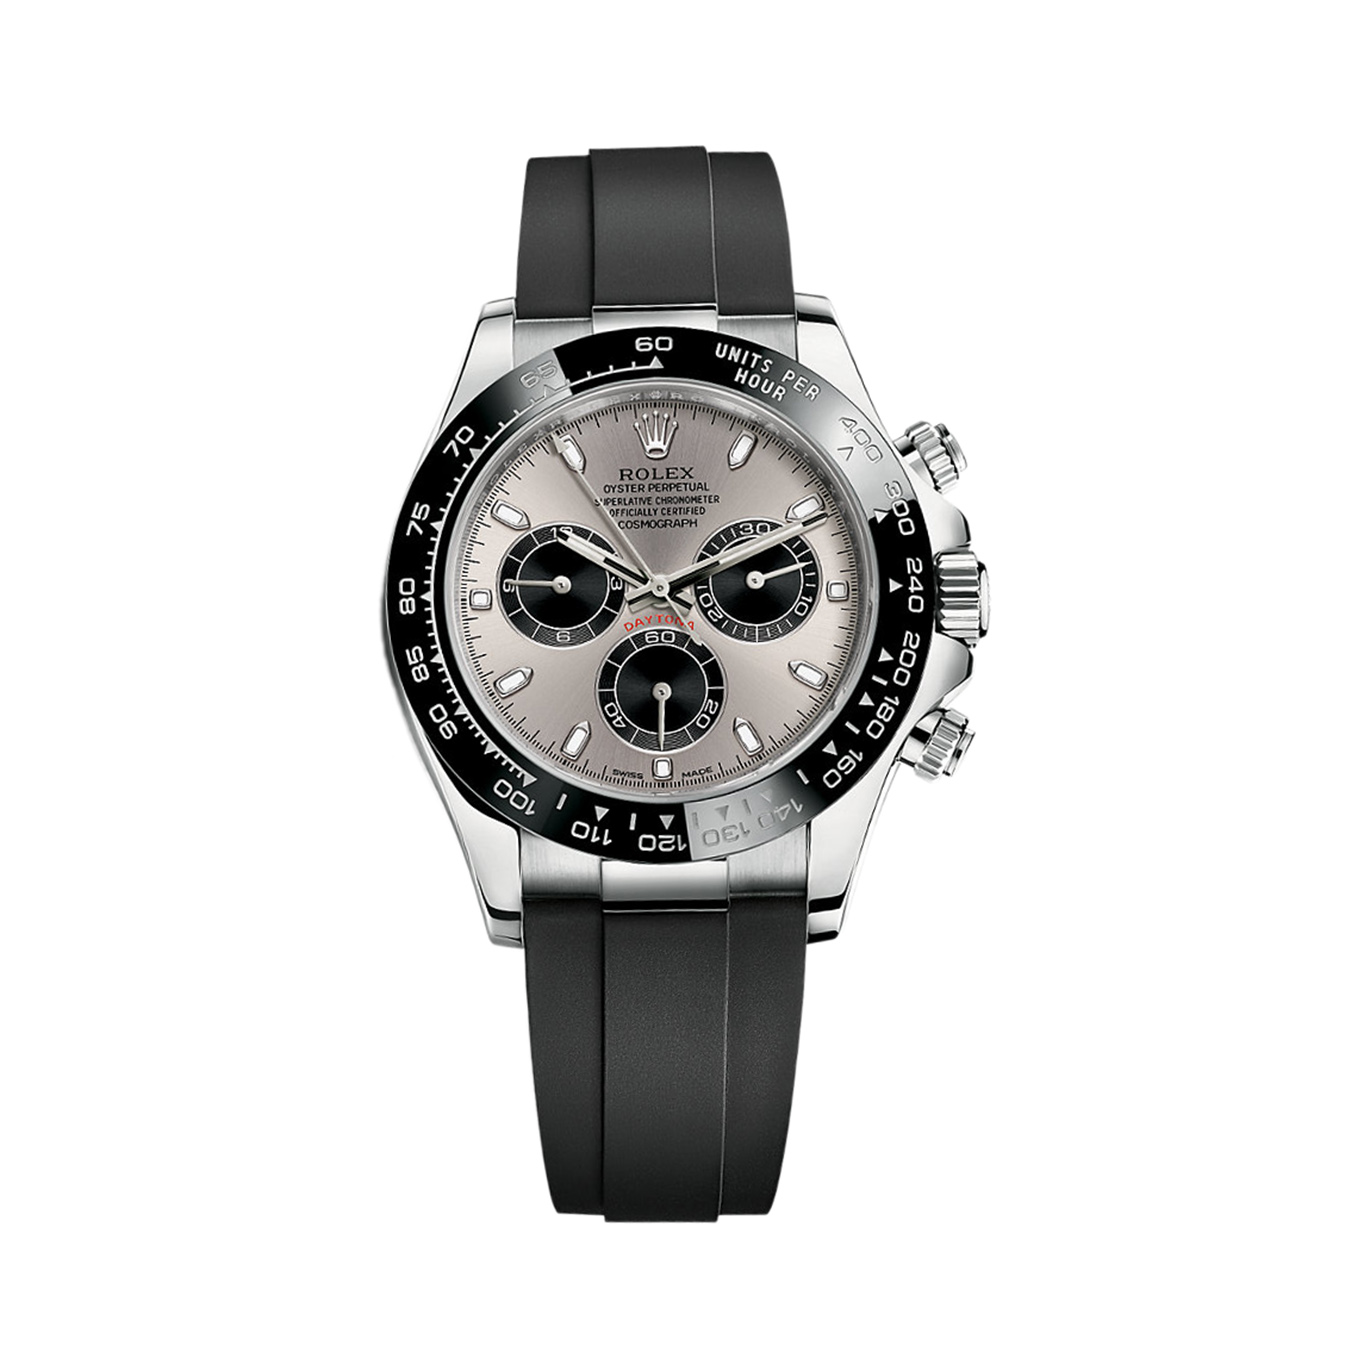 Cosmograph Daytona 116519LN White Gold Watch (Steel & Black)